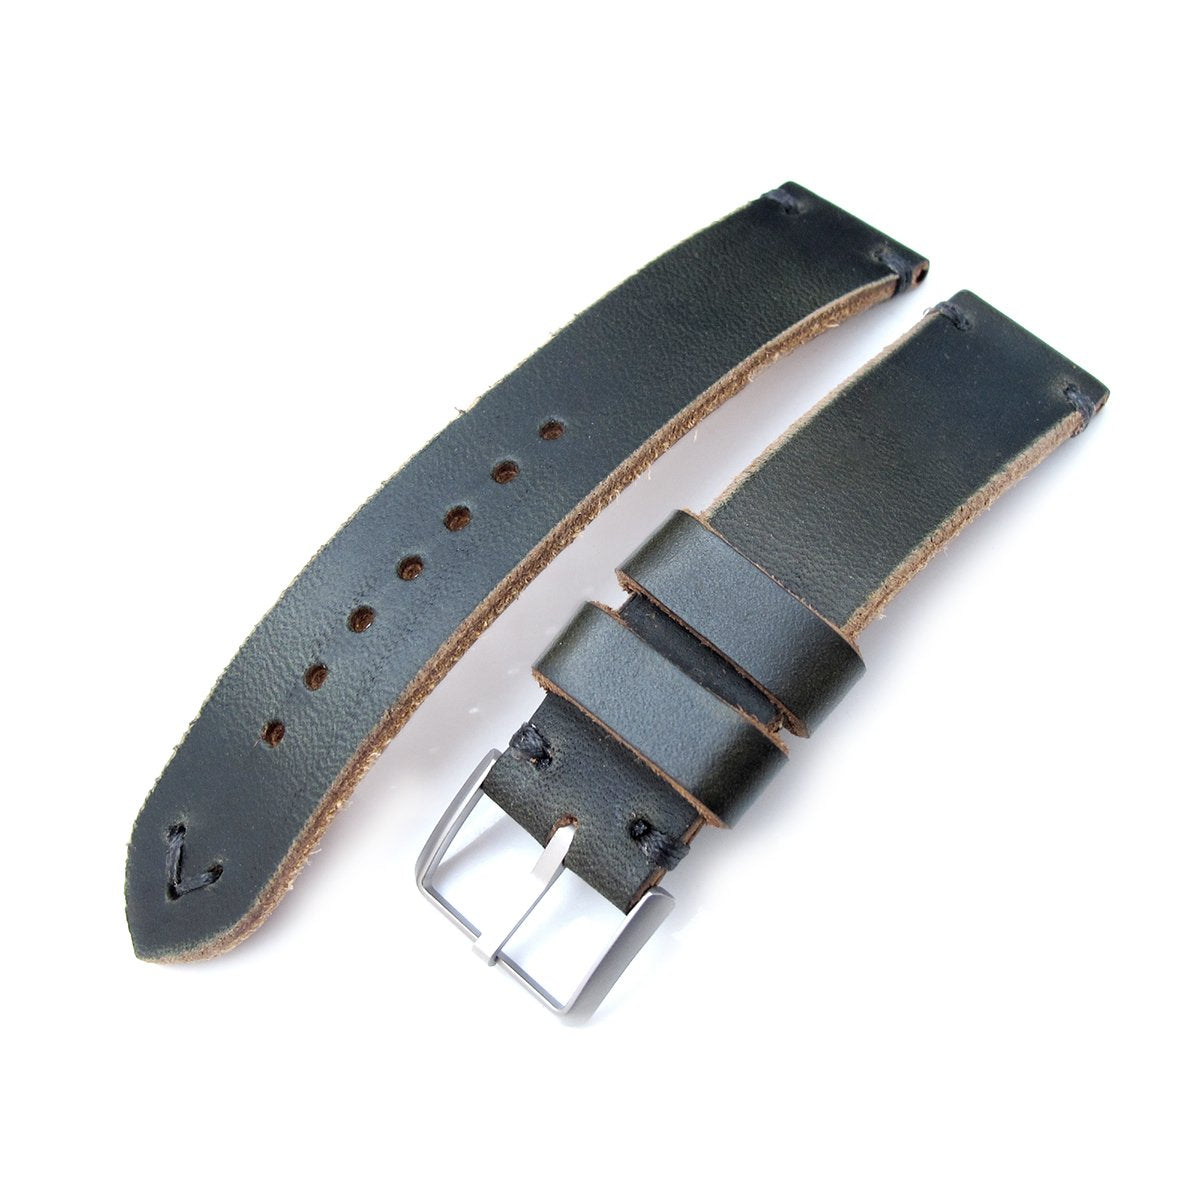 20mm 22mm MiLTAT Horween Chromexcel Watch Strap Blackish Green Grey Stitching Strapcode Watch Bands